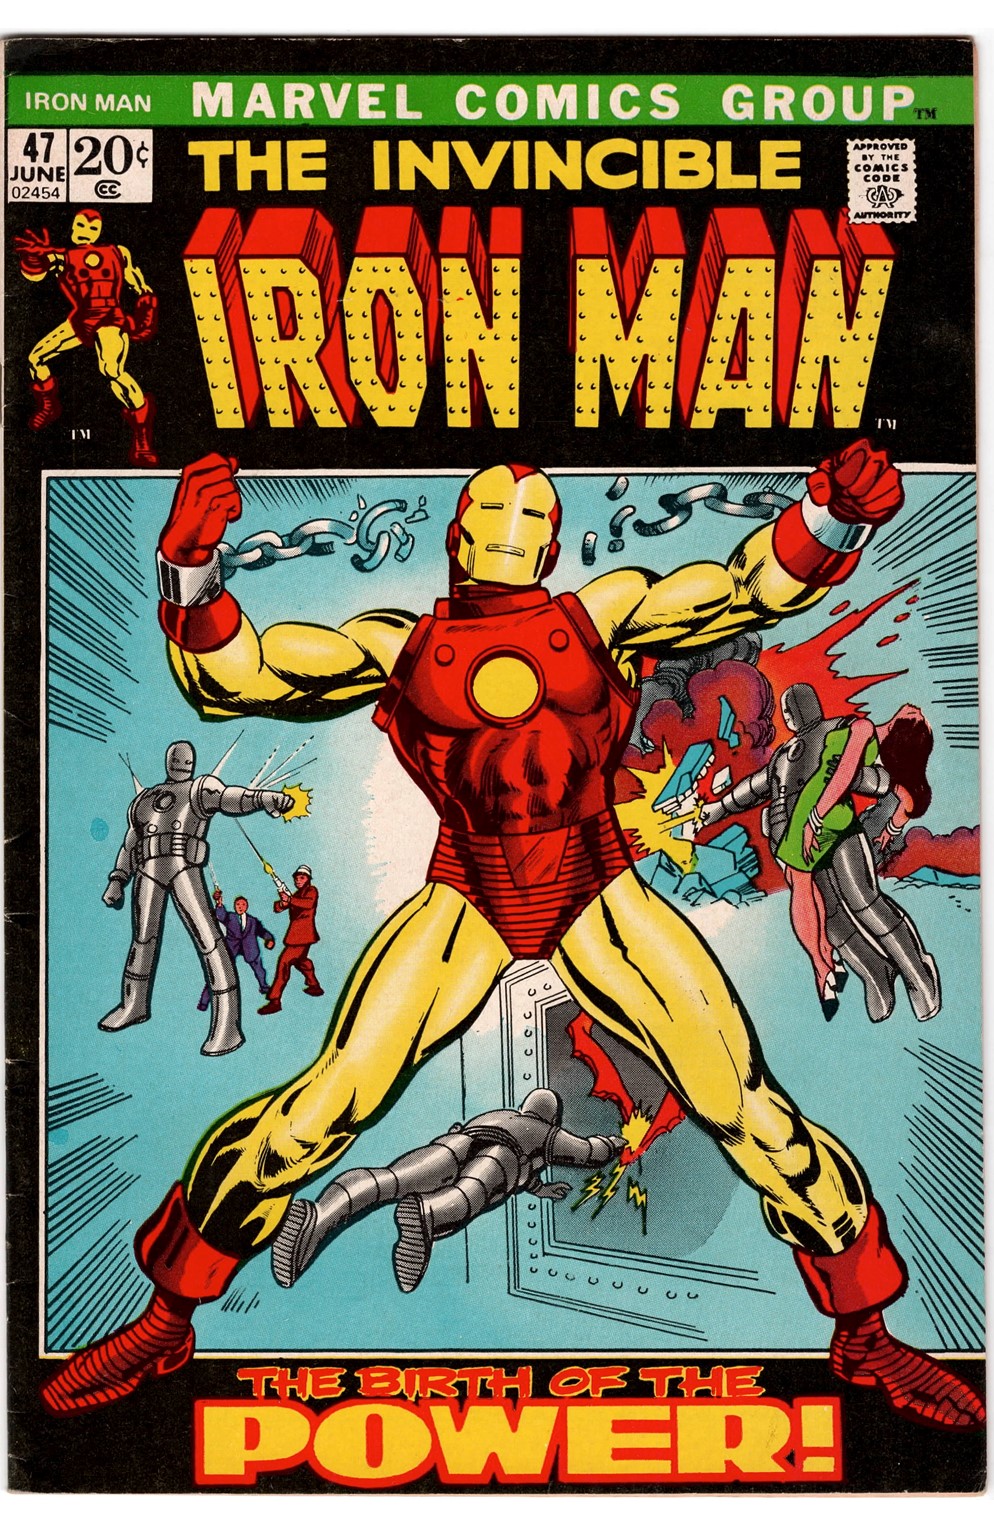 Iron Man #047